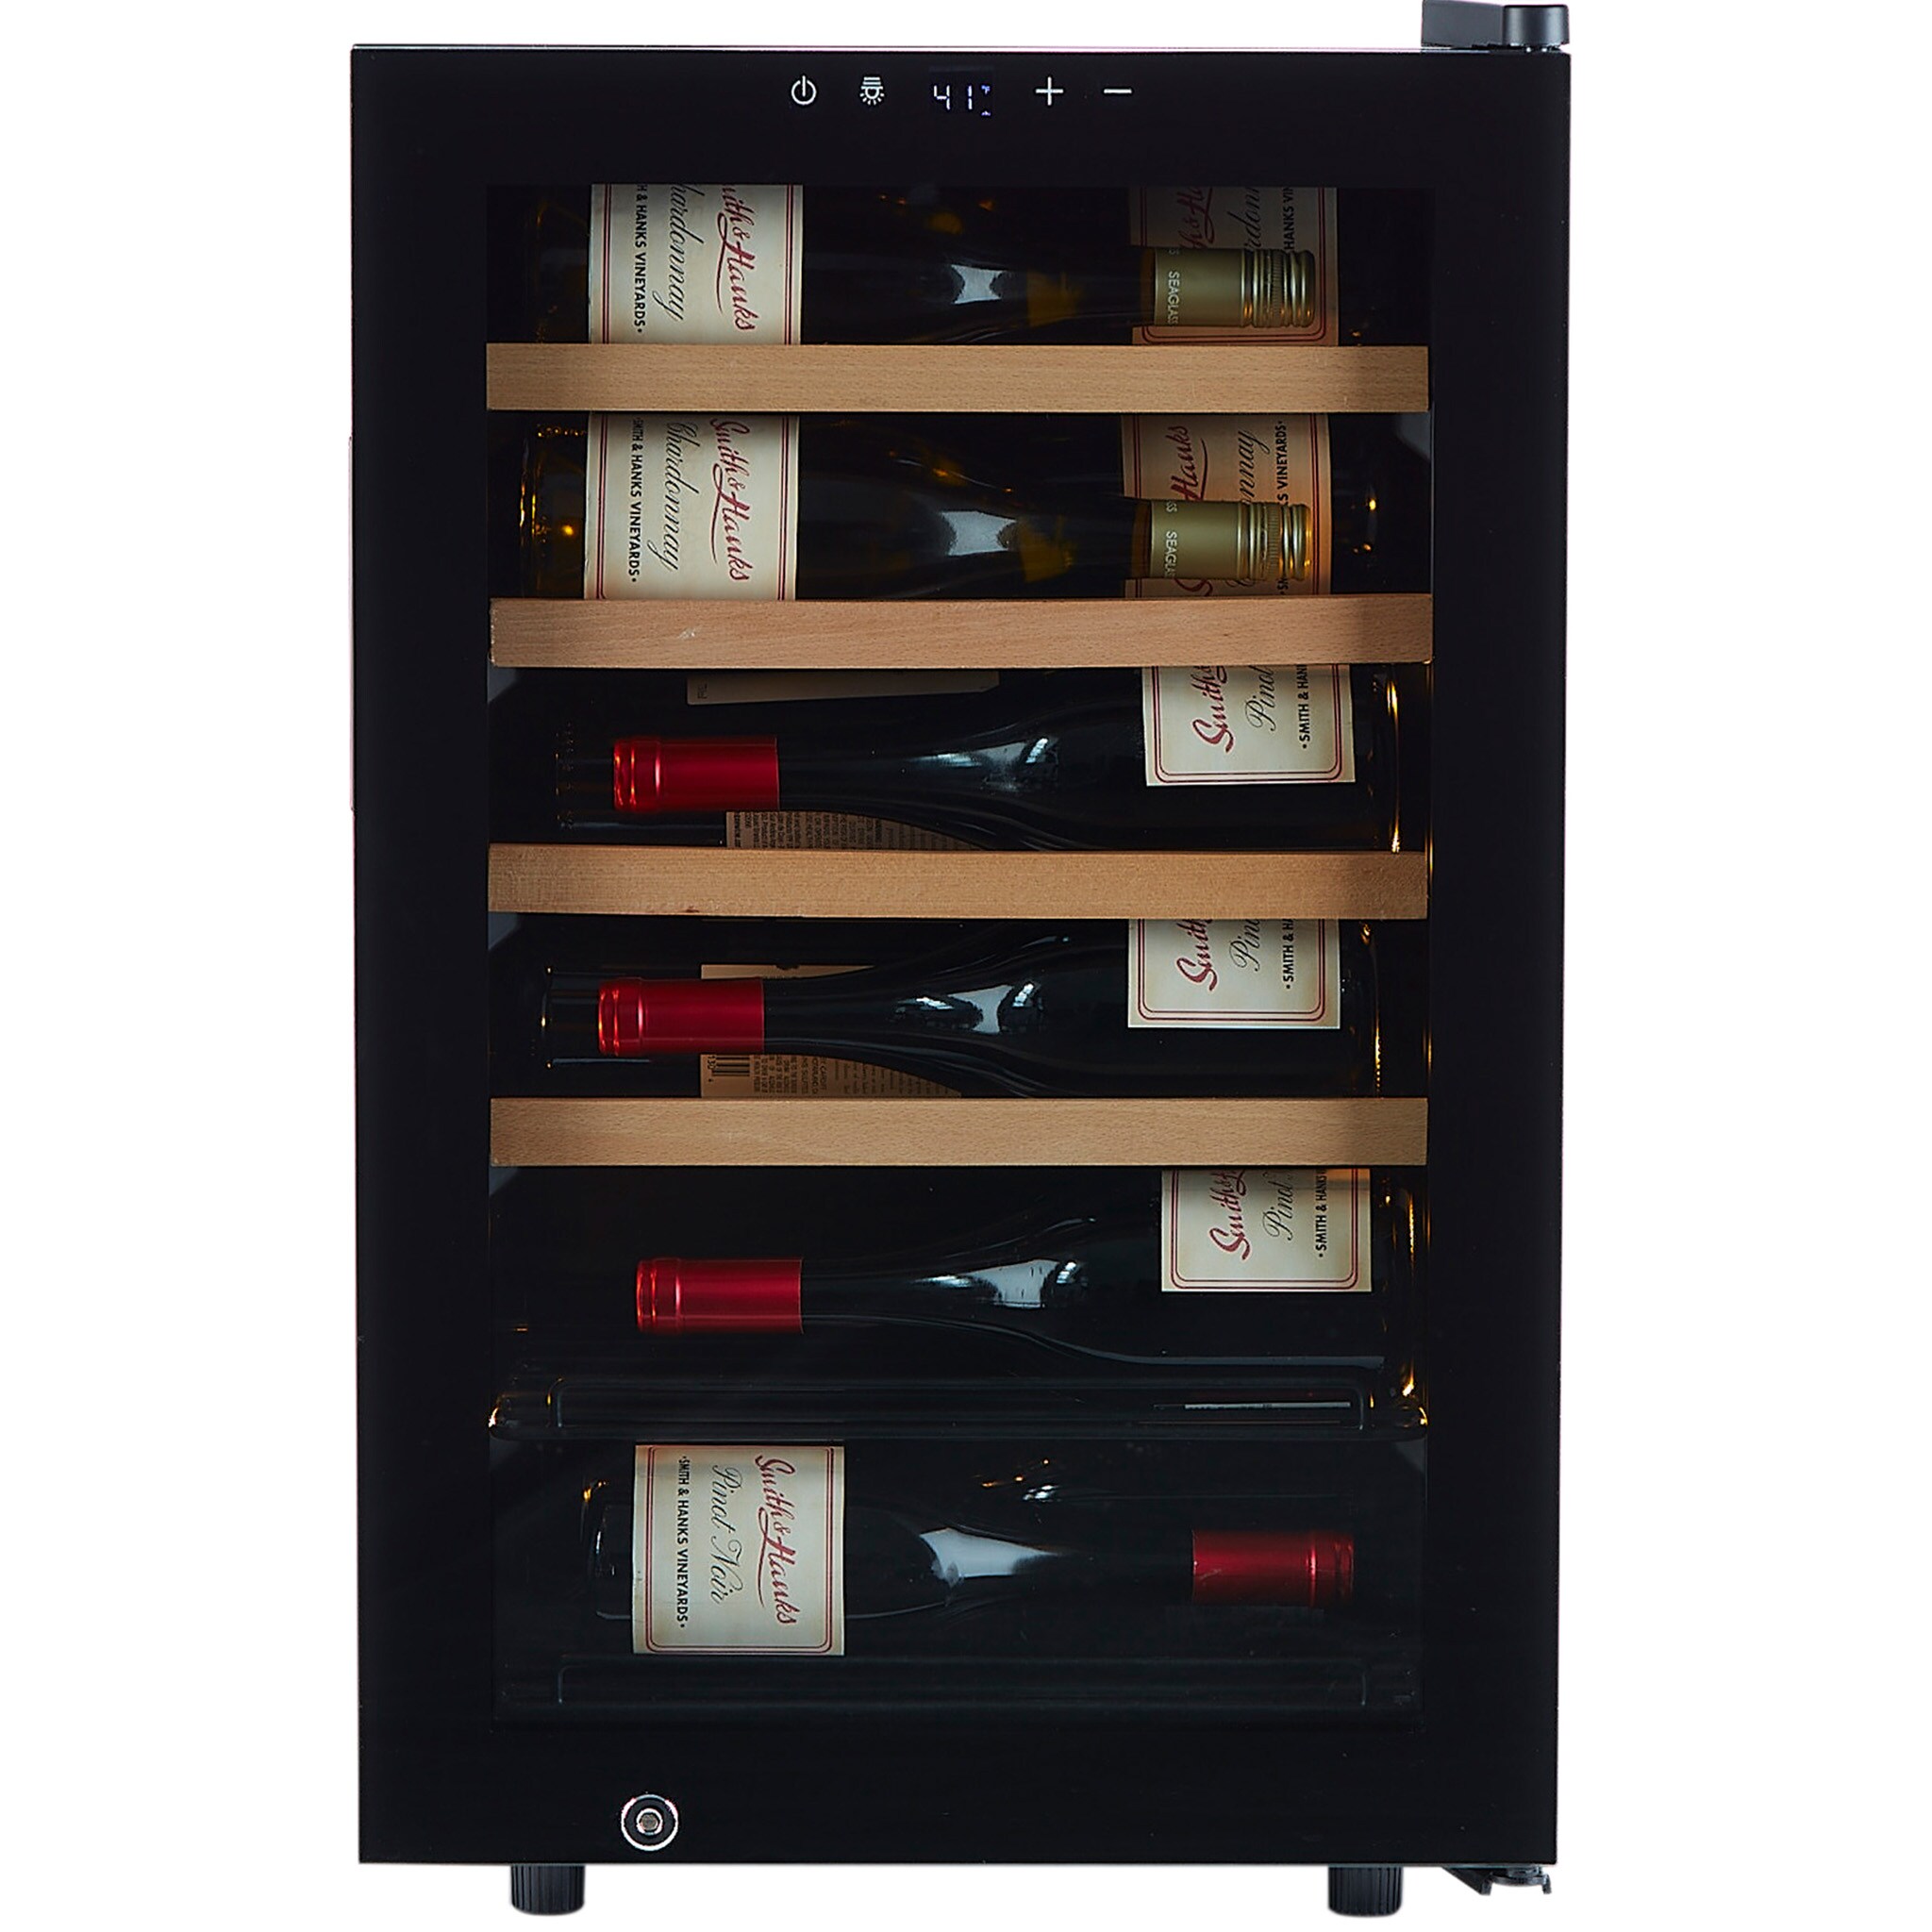 Black+decker BD61516 14 Bottle Wine cellar